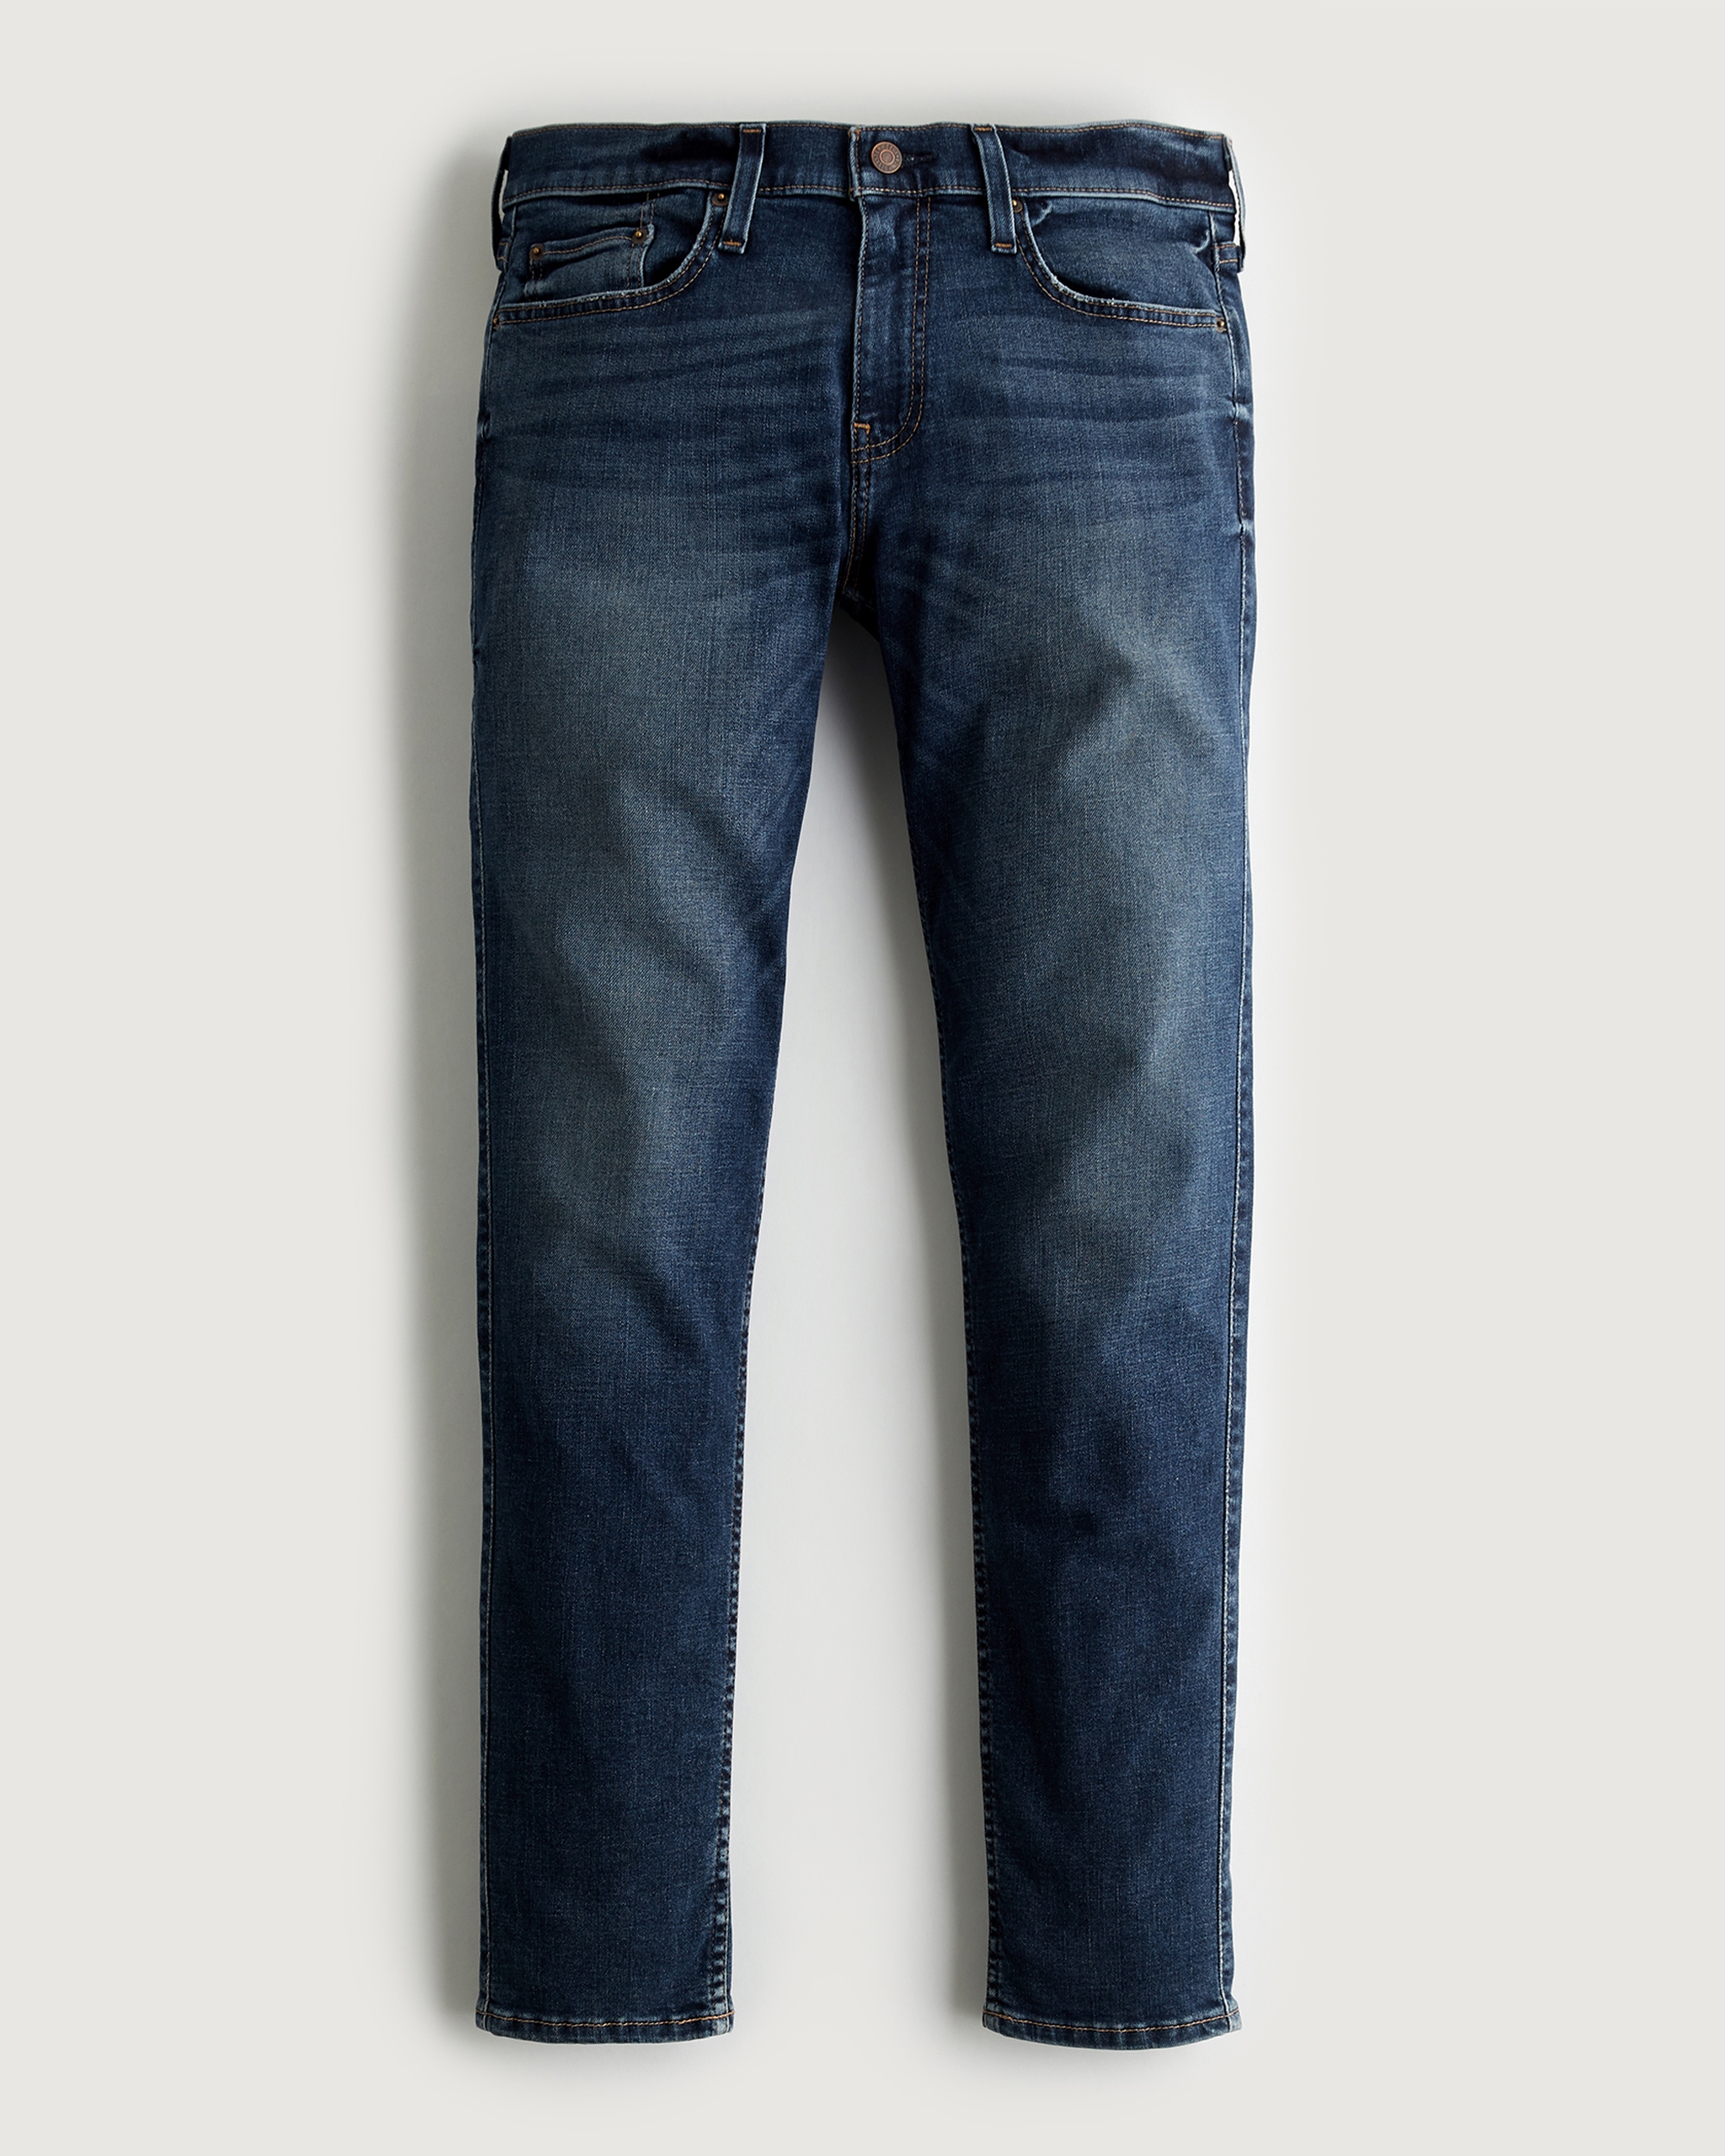 buy hollister jeans online